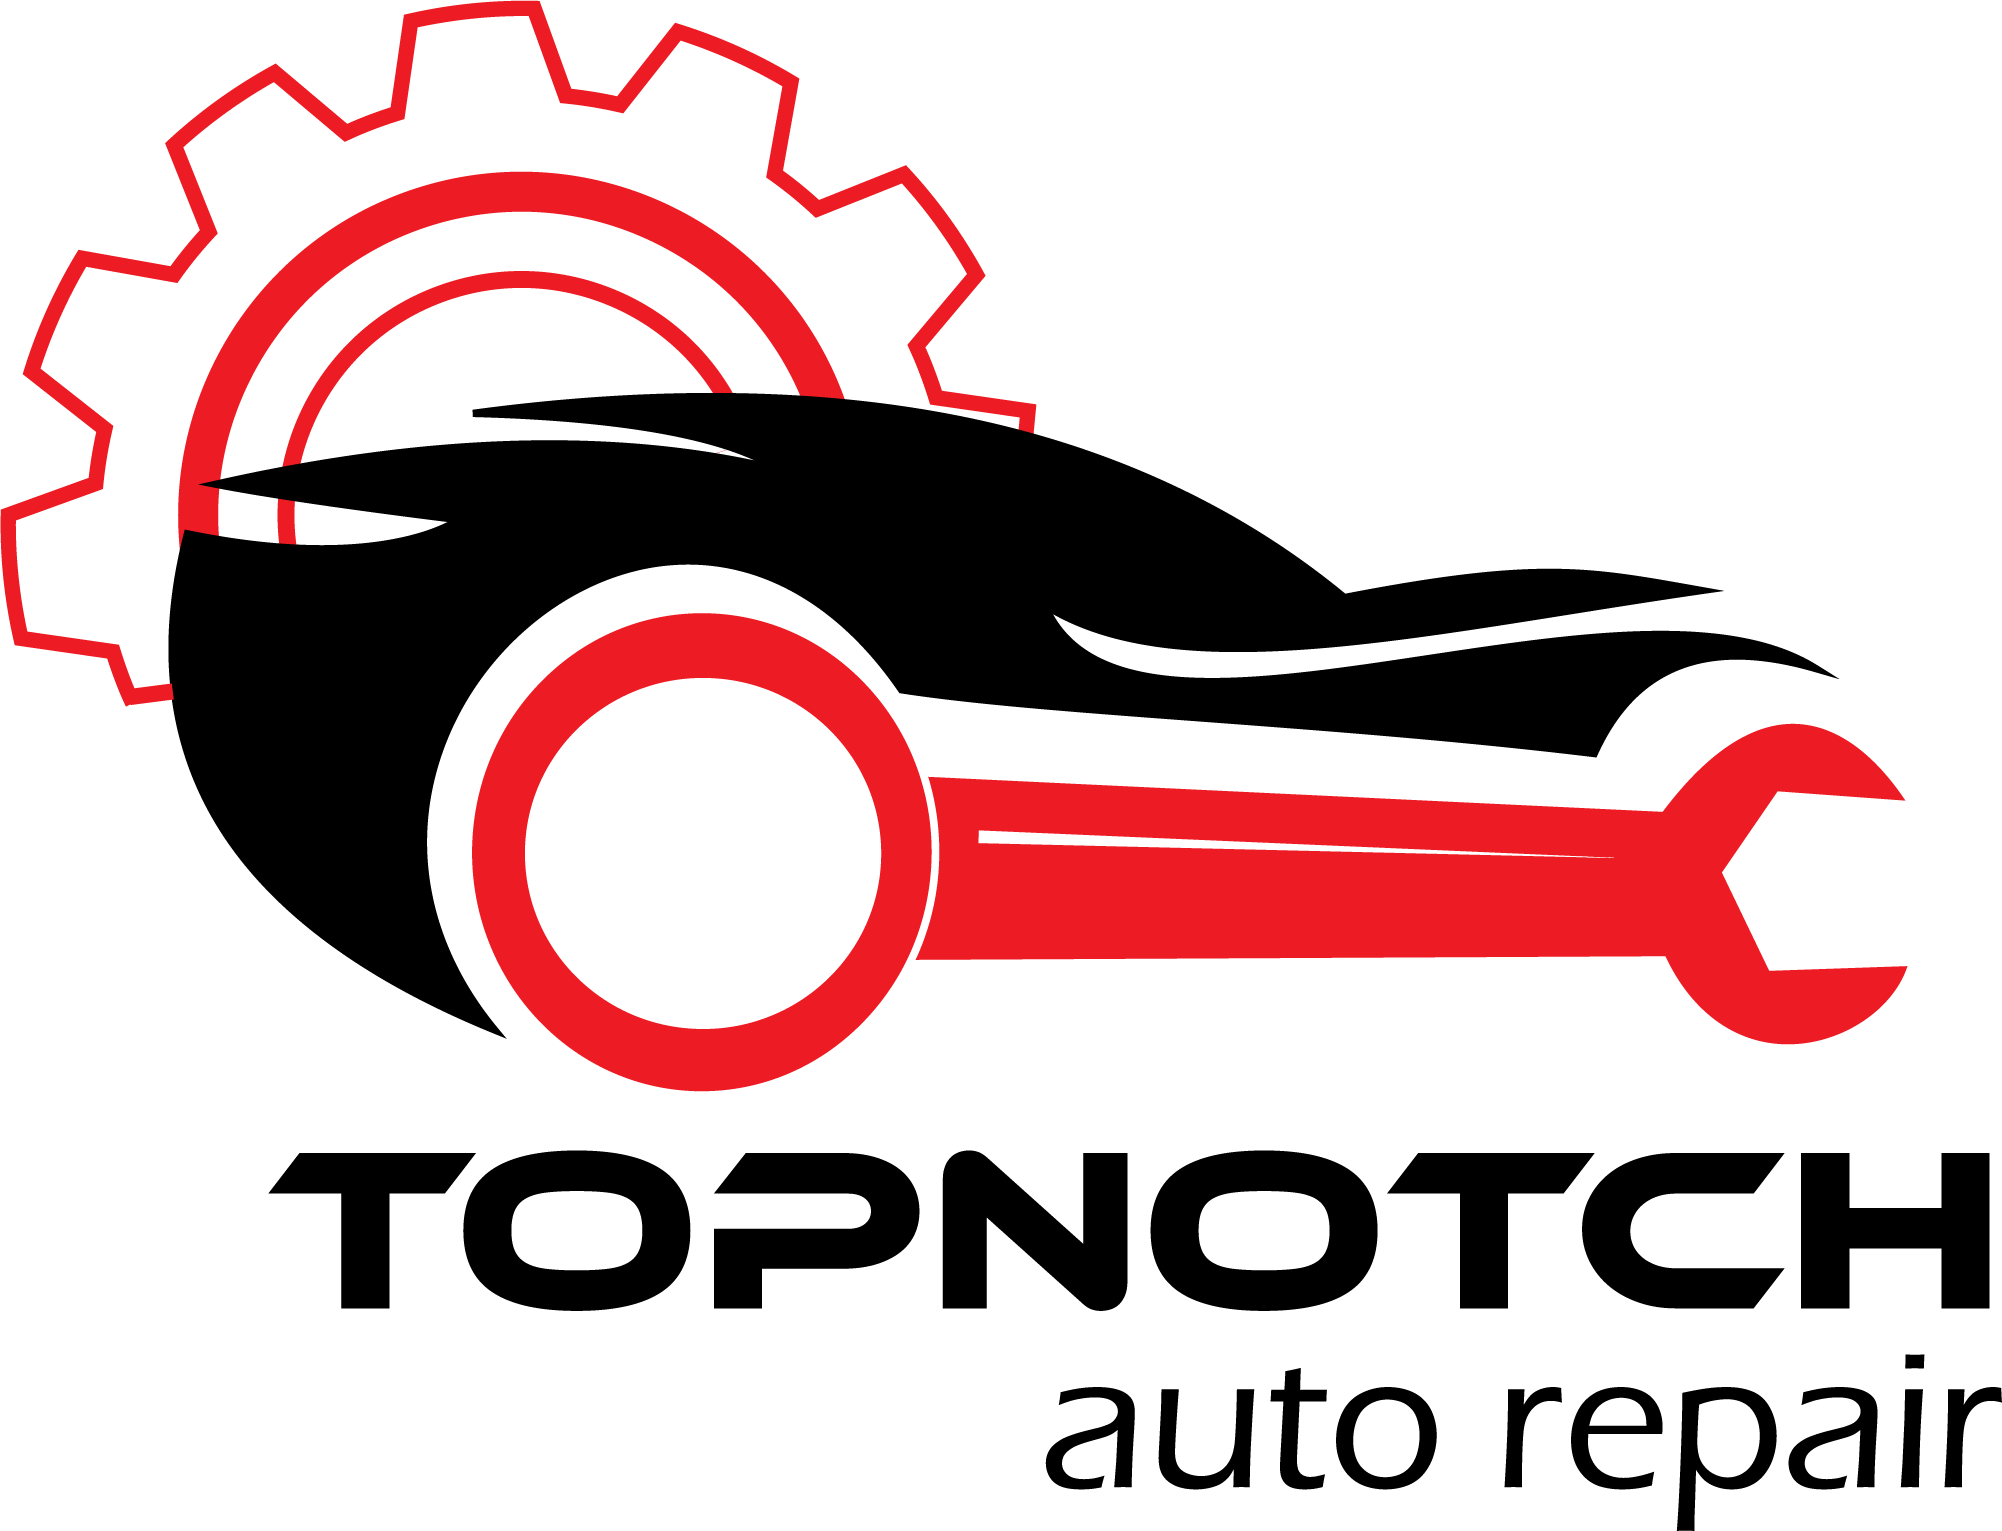 Cool Auto Shop Logo - HOME | TOPNOTCH